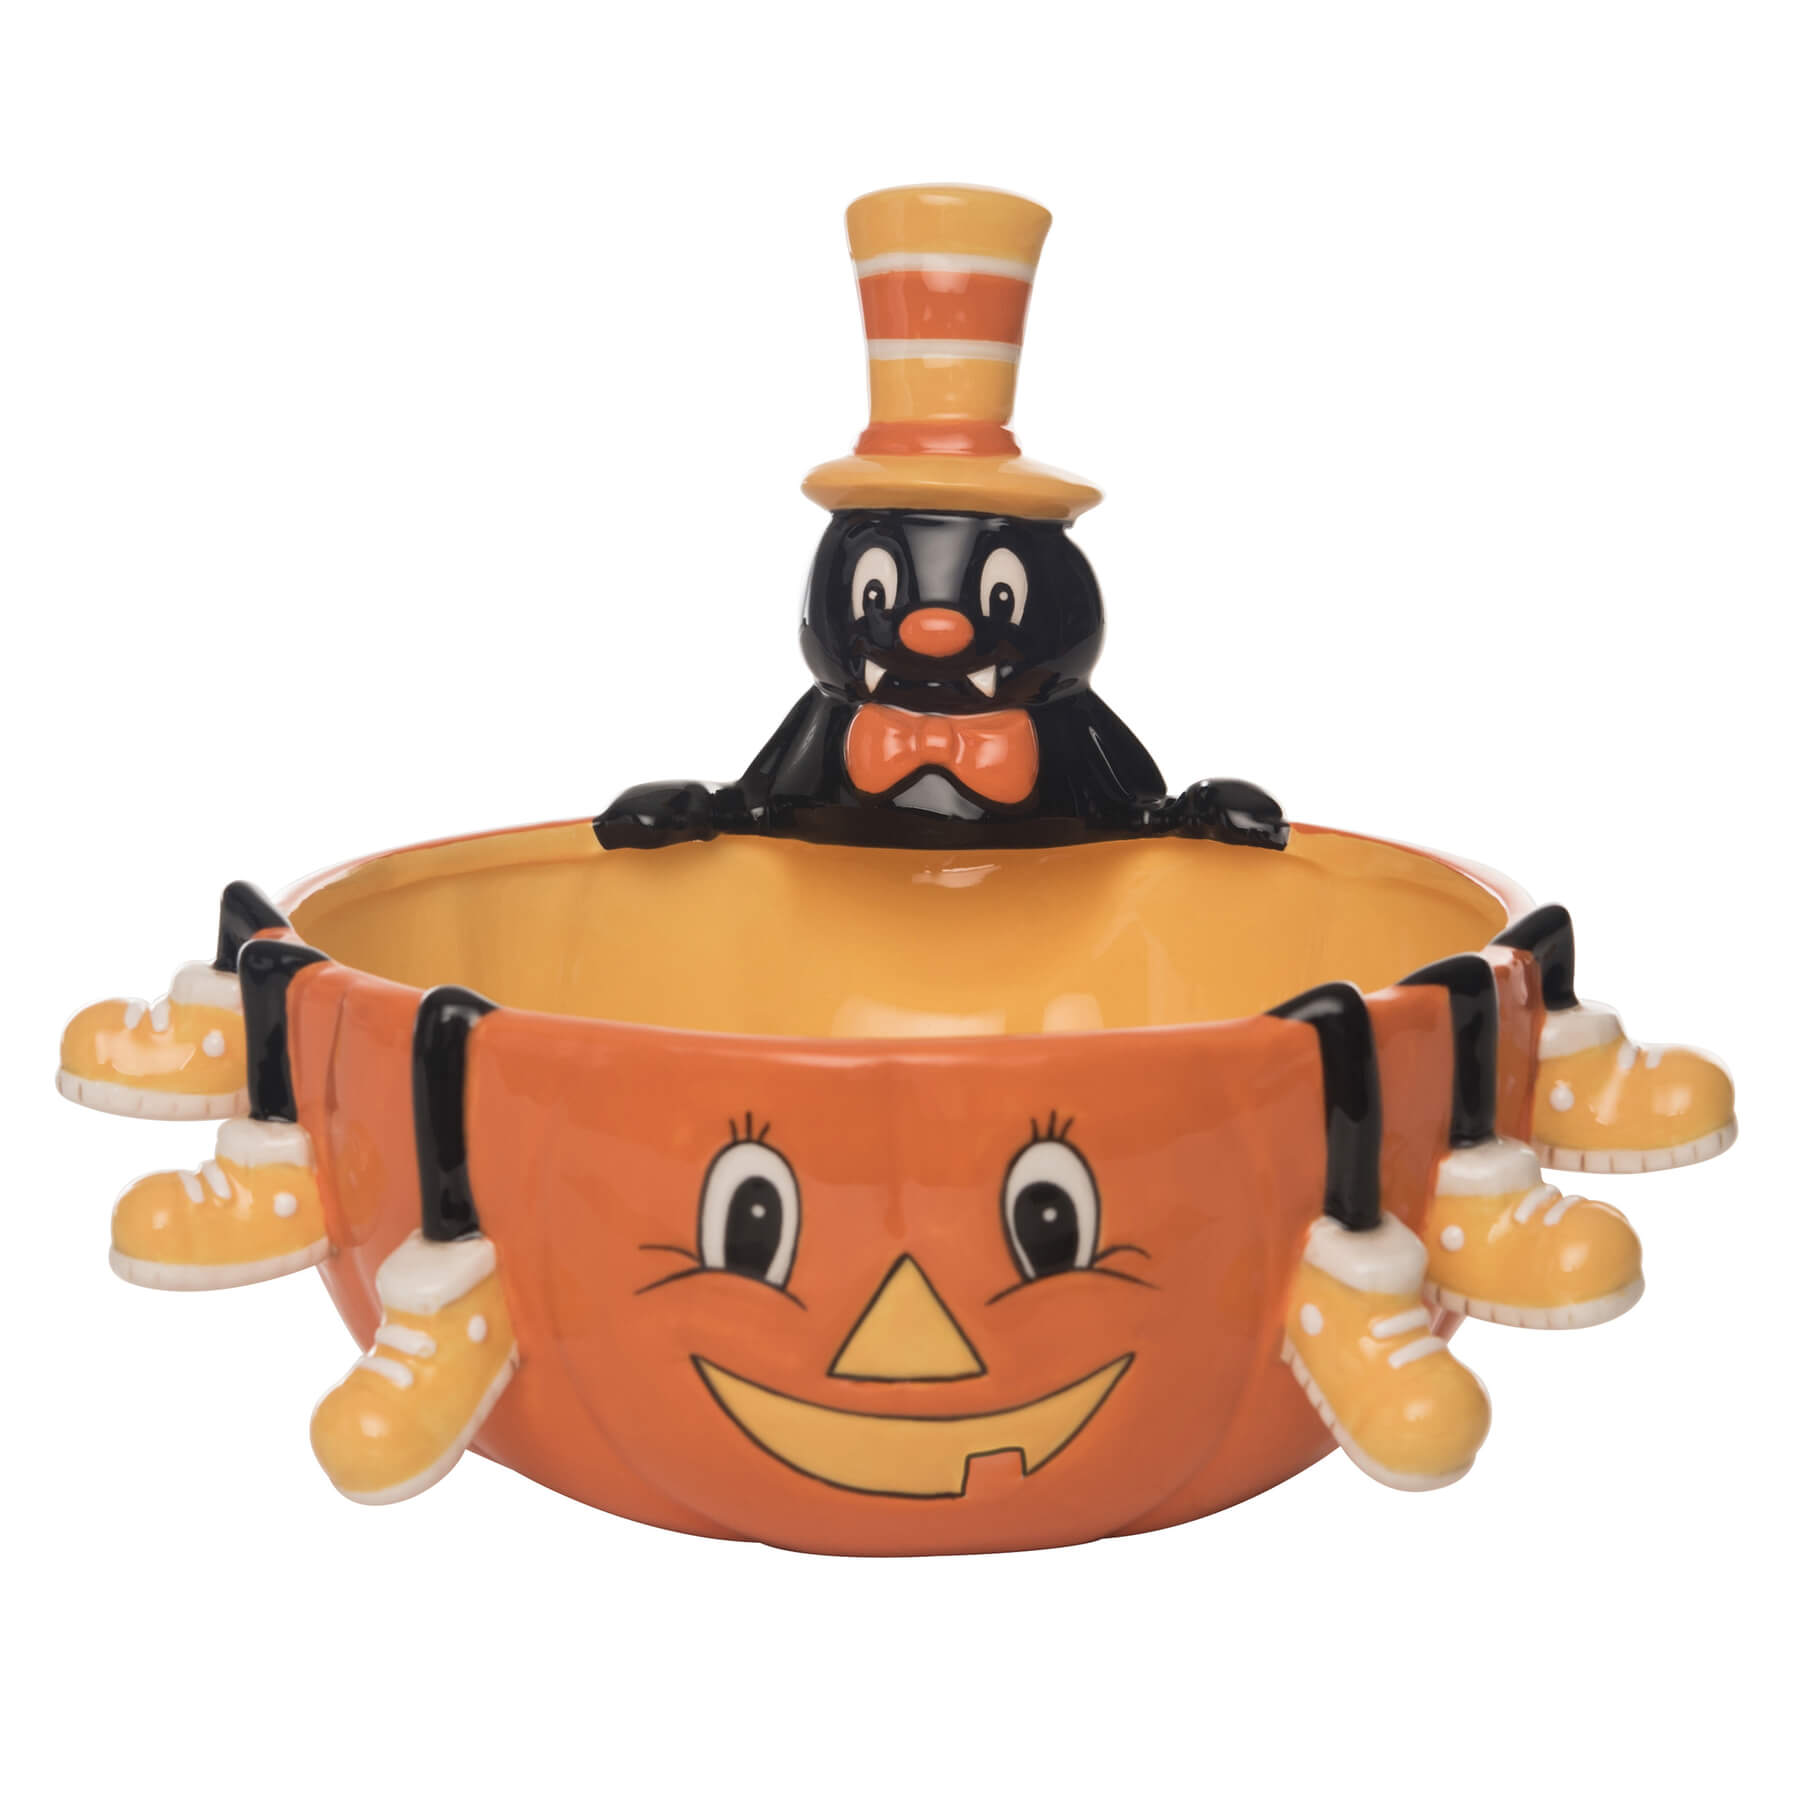 Spider & Pumpkin Candy Bowl